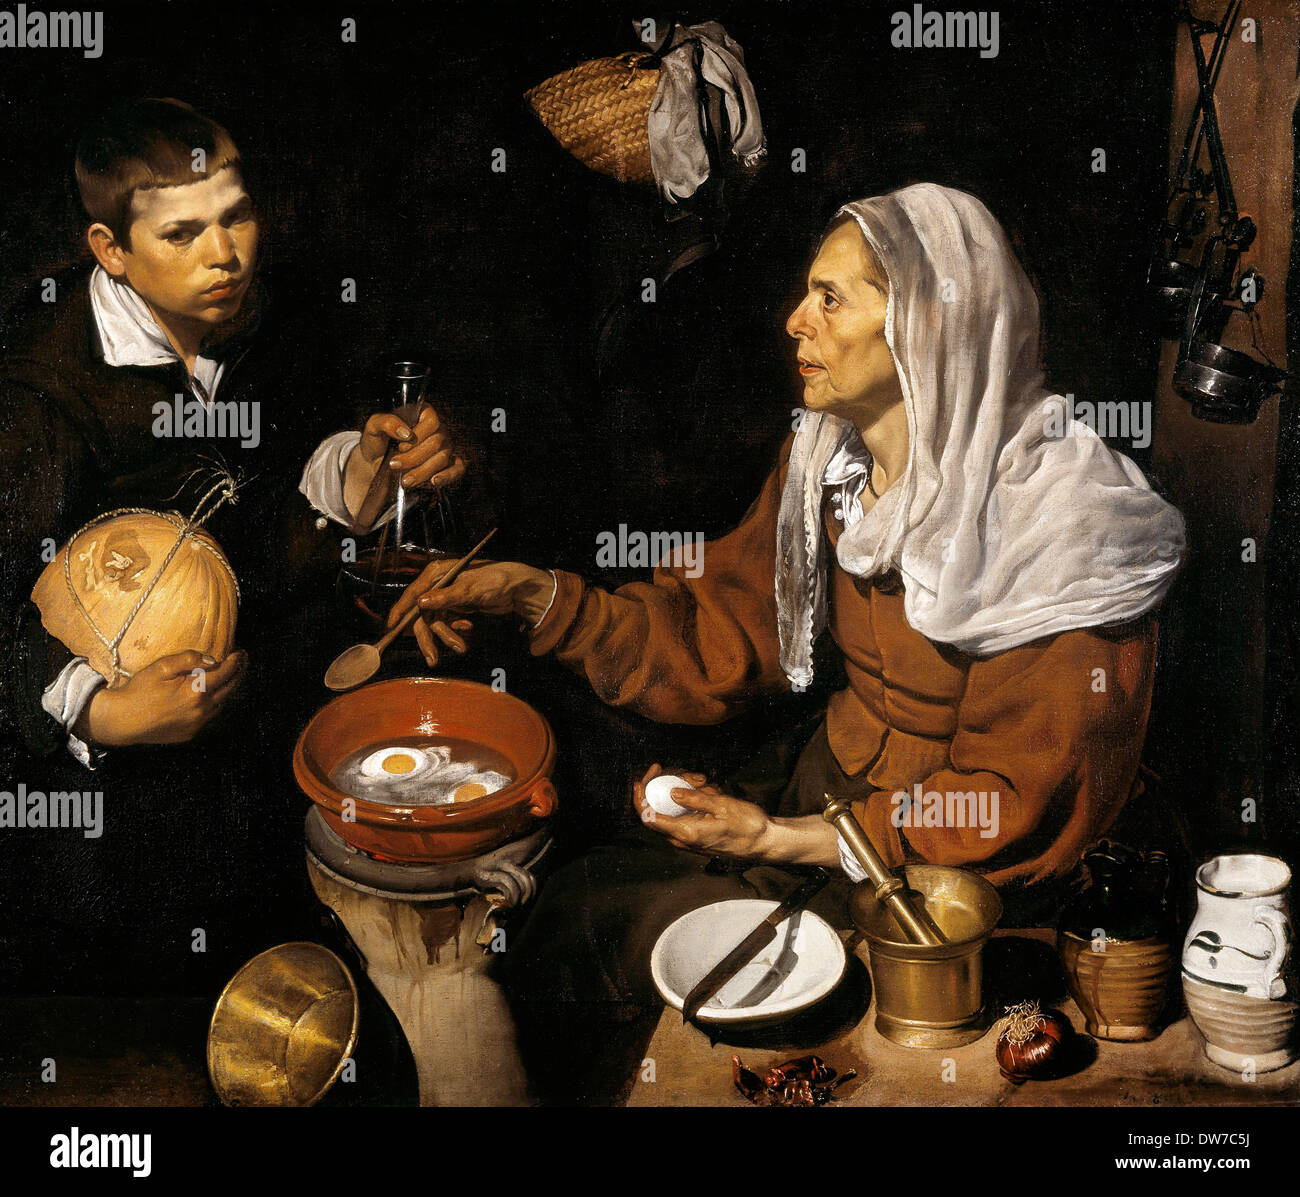 Diego Rodriguez de Silva y Velazquez, An Old Woman Cooking Eggs 1618 Oil on canvas. Scottish National Gallery, Edinburgh. Stock Photo